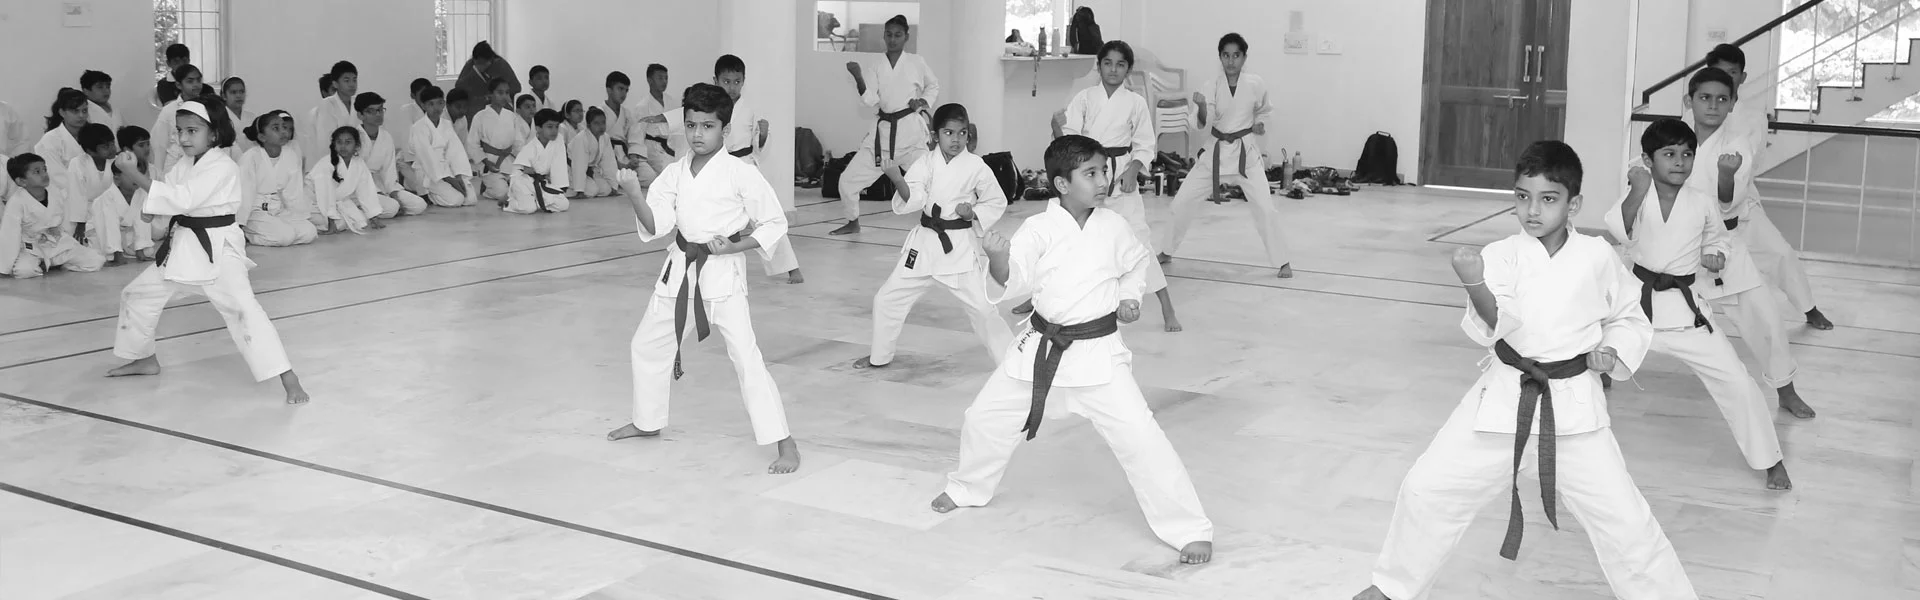 Martial Arts For Children’s